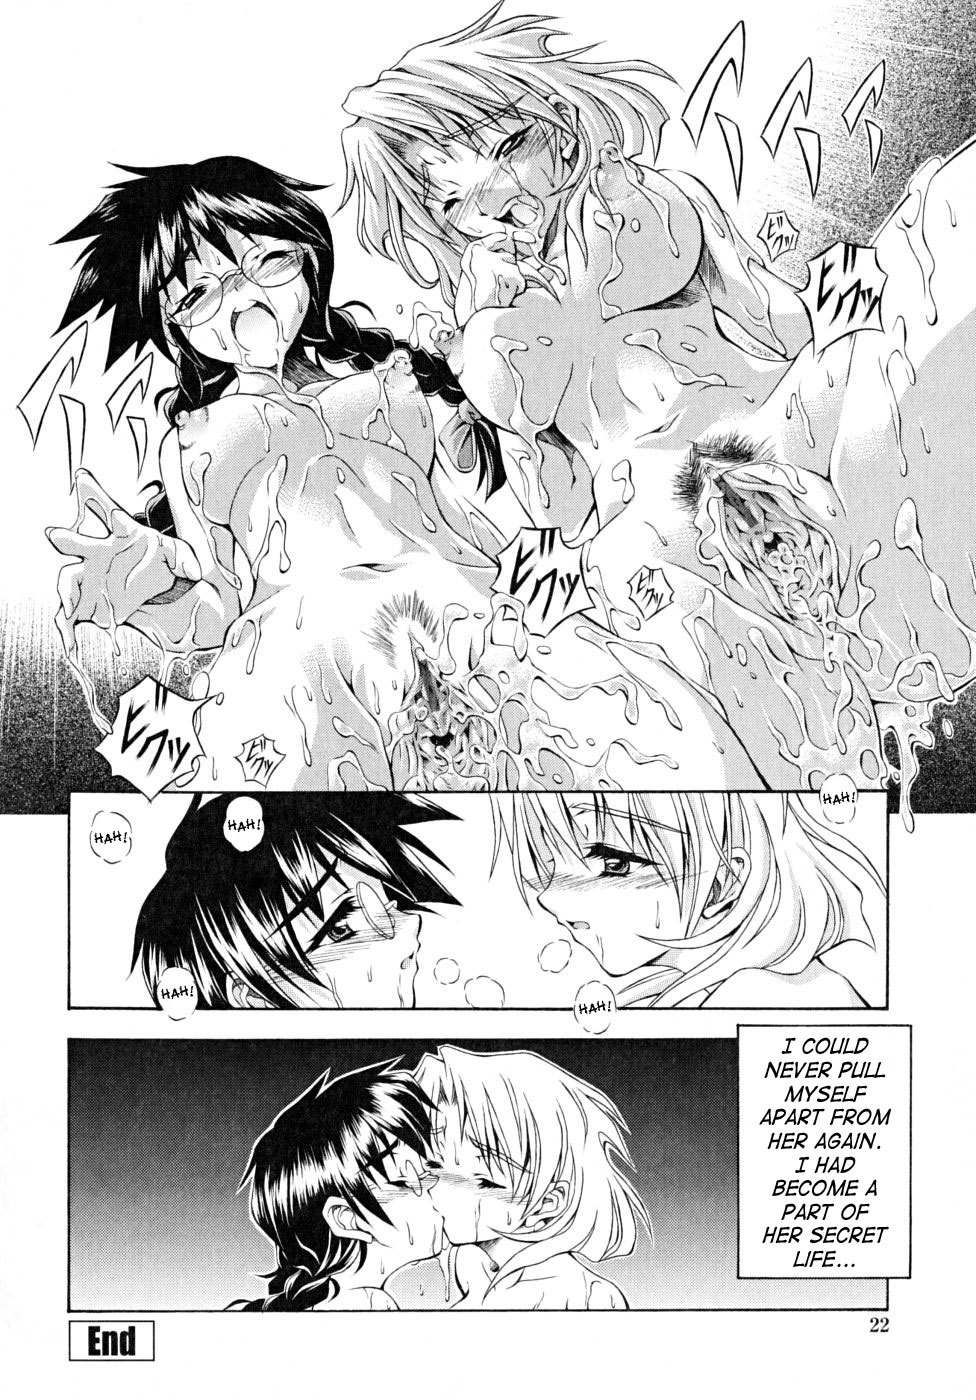 Binhou 15 hentai manga